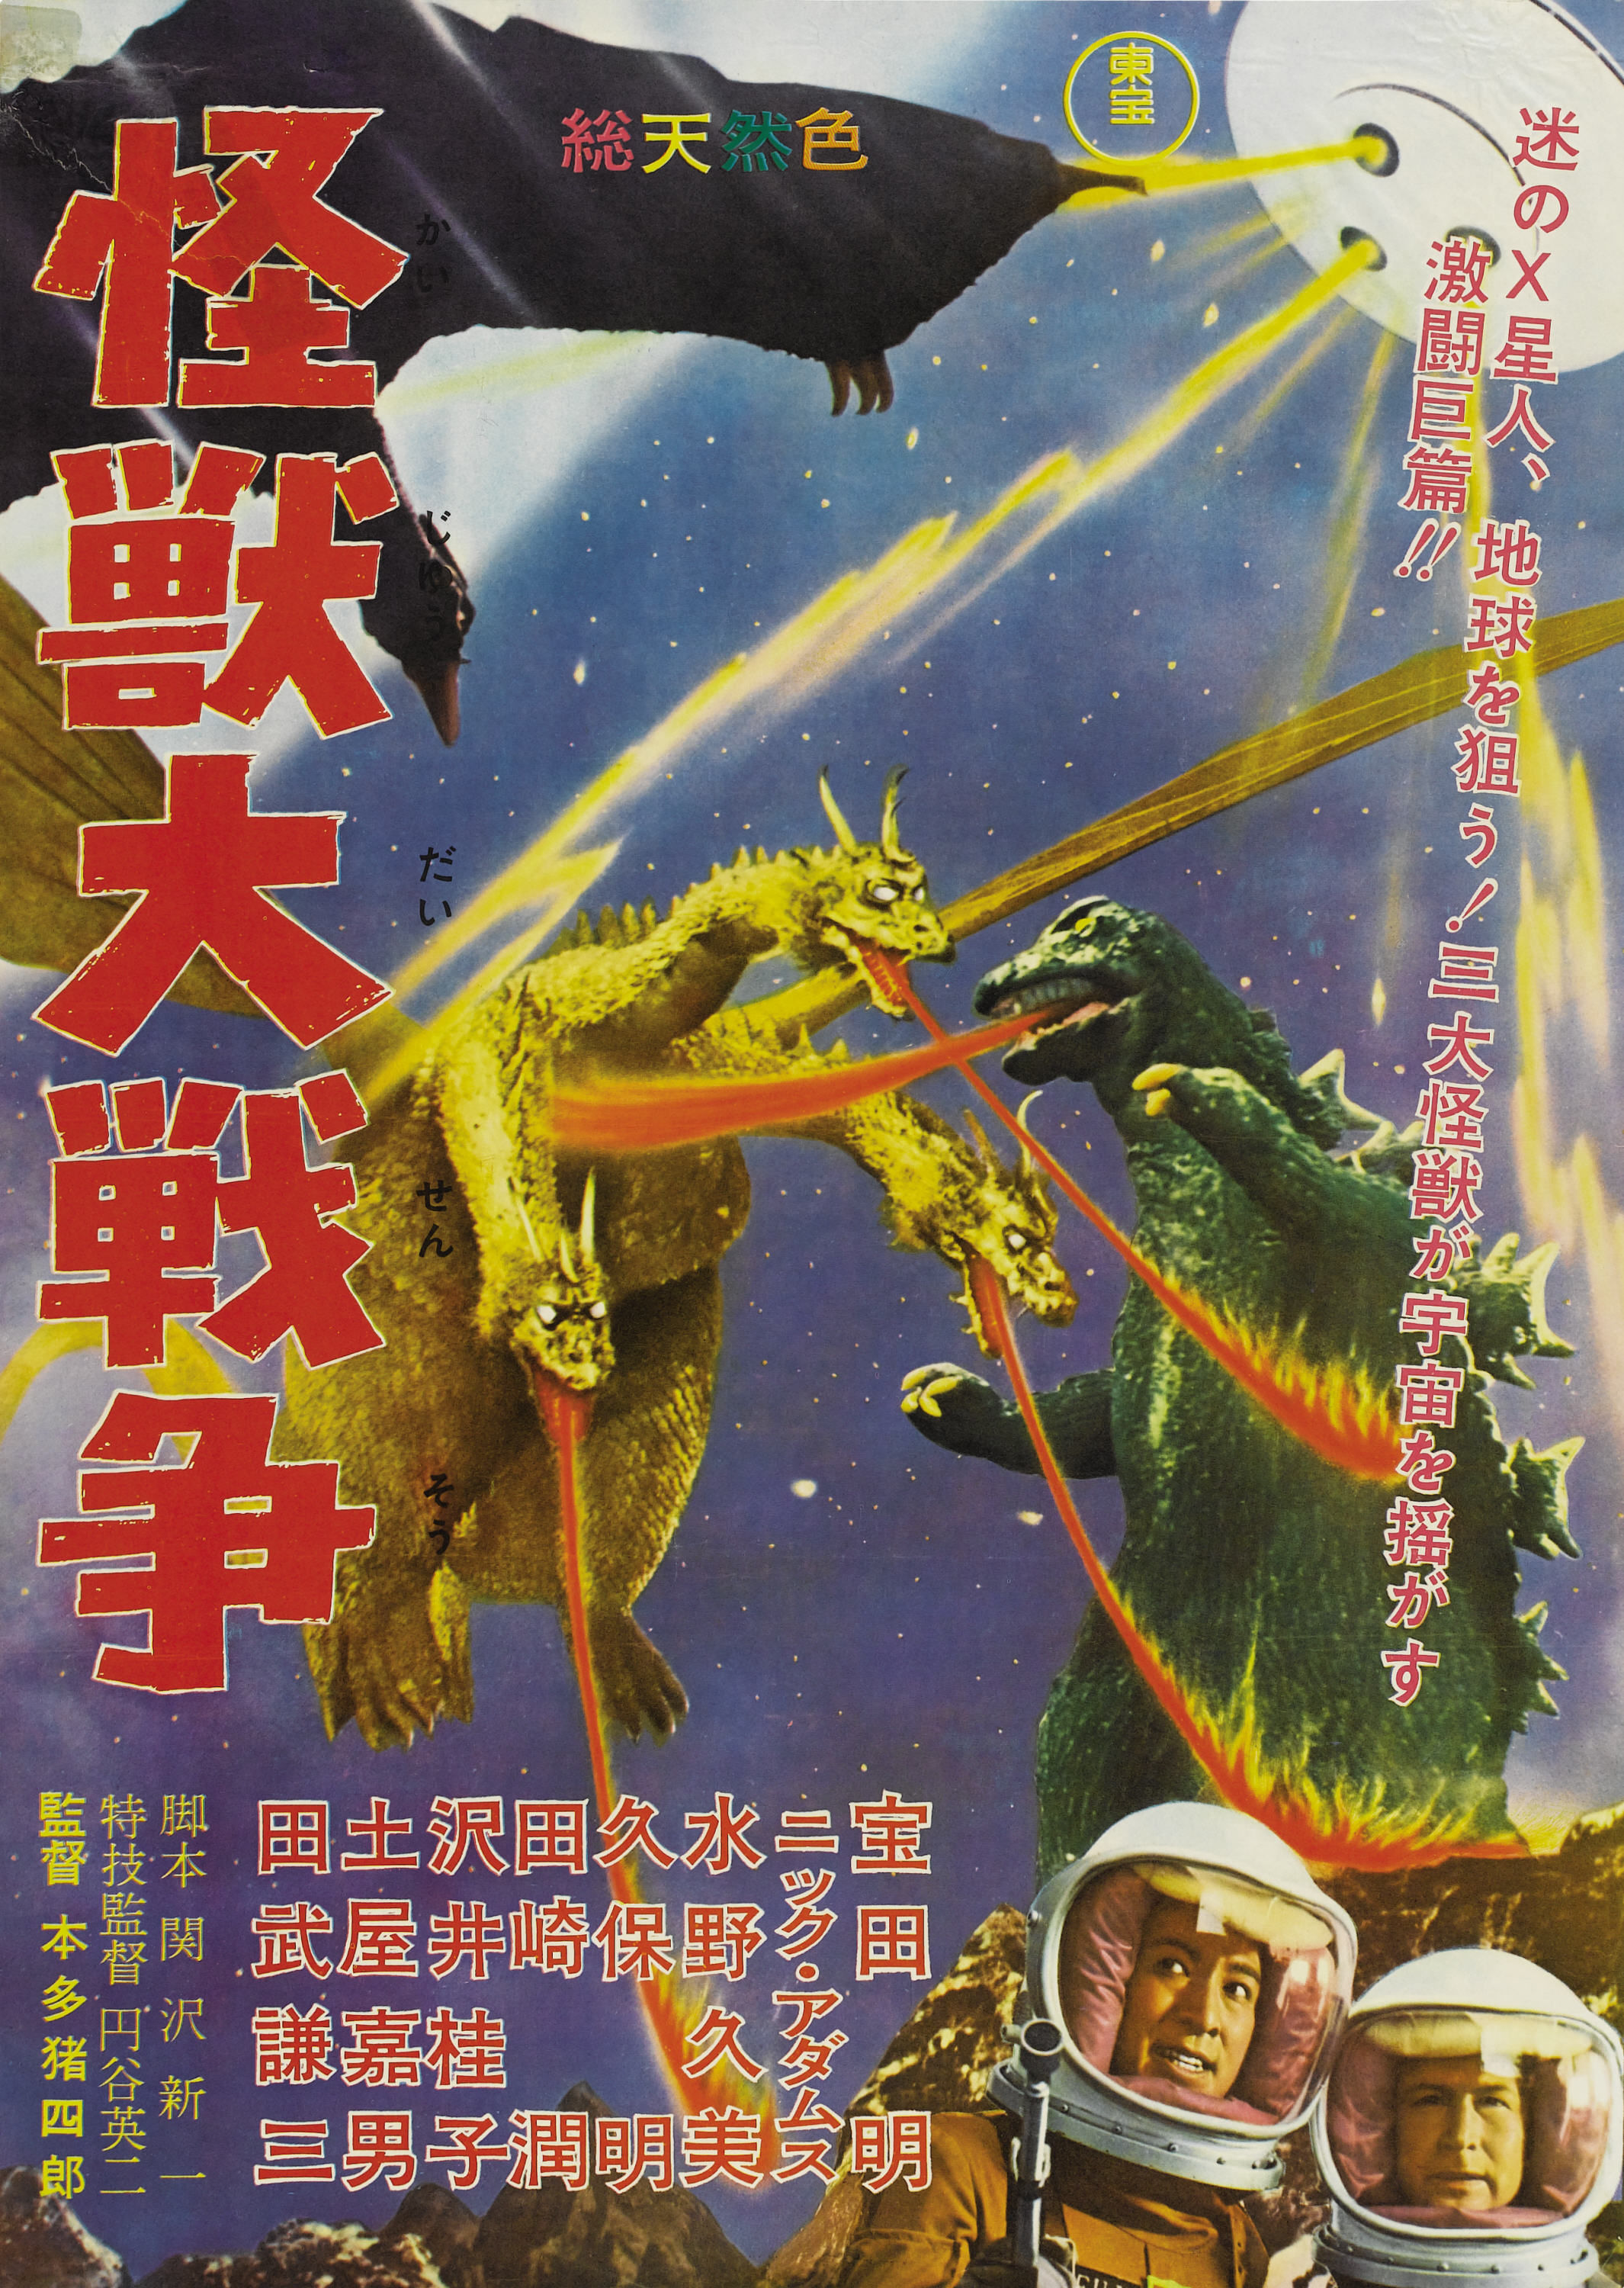 Godzilla vs. Monster Zero